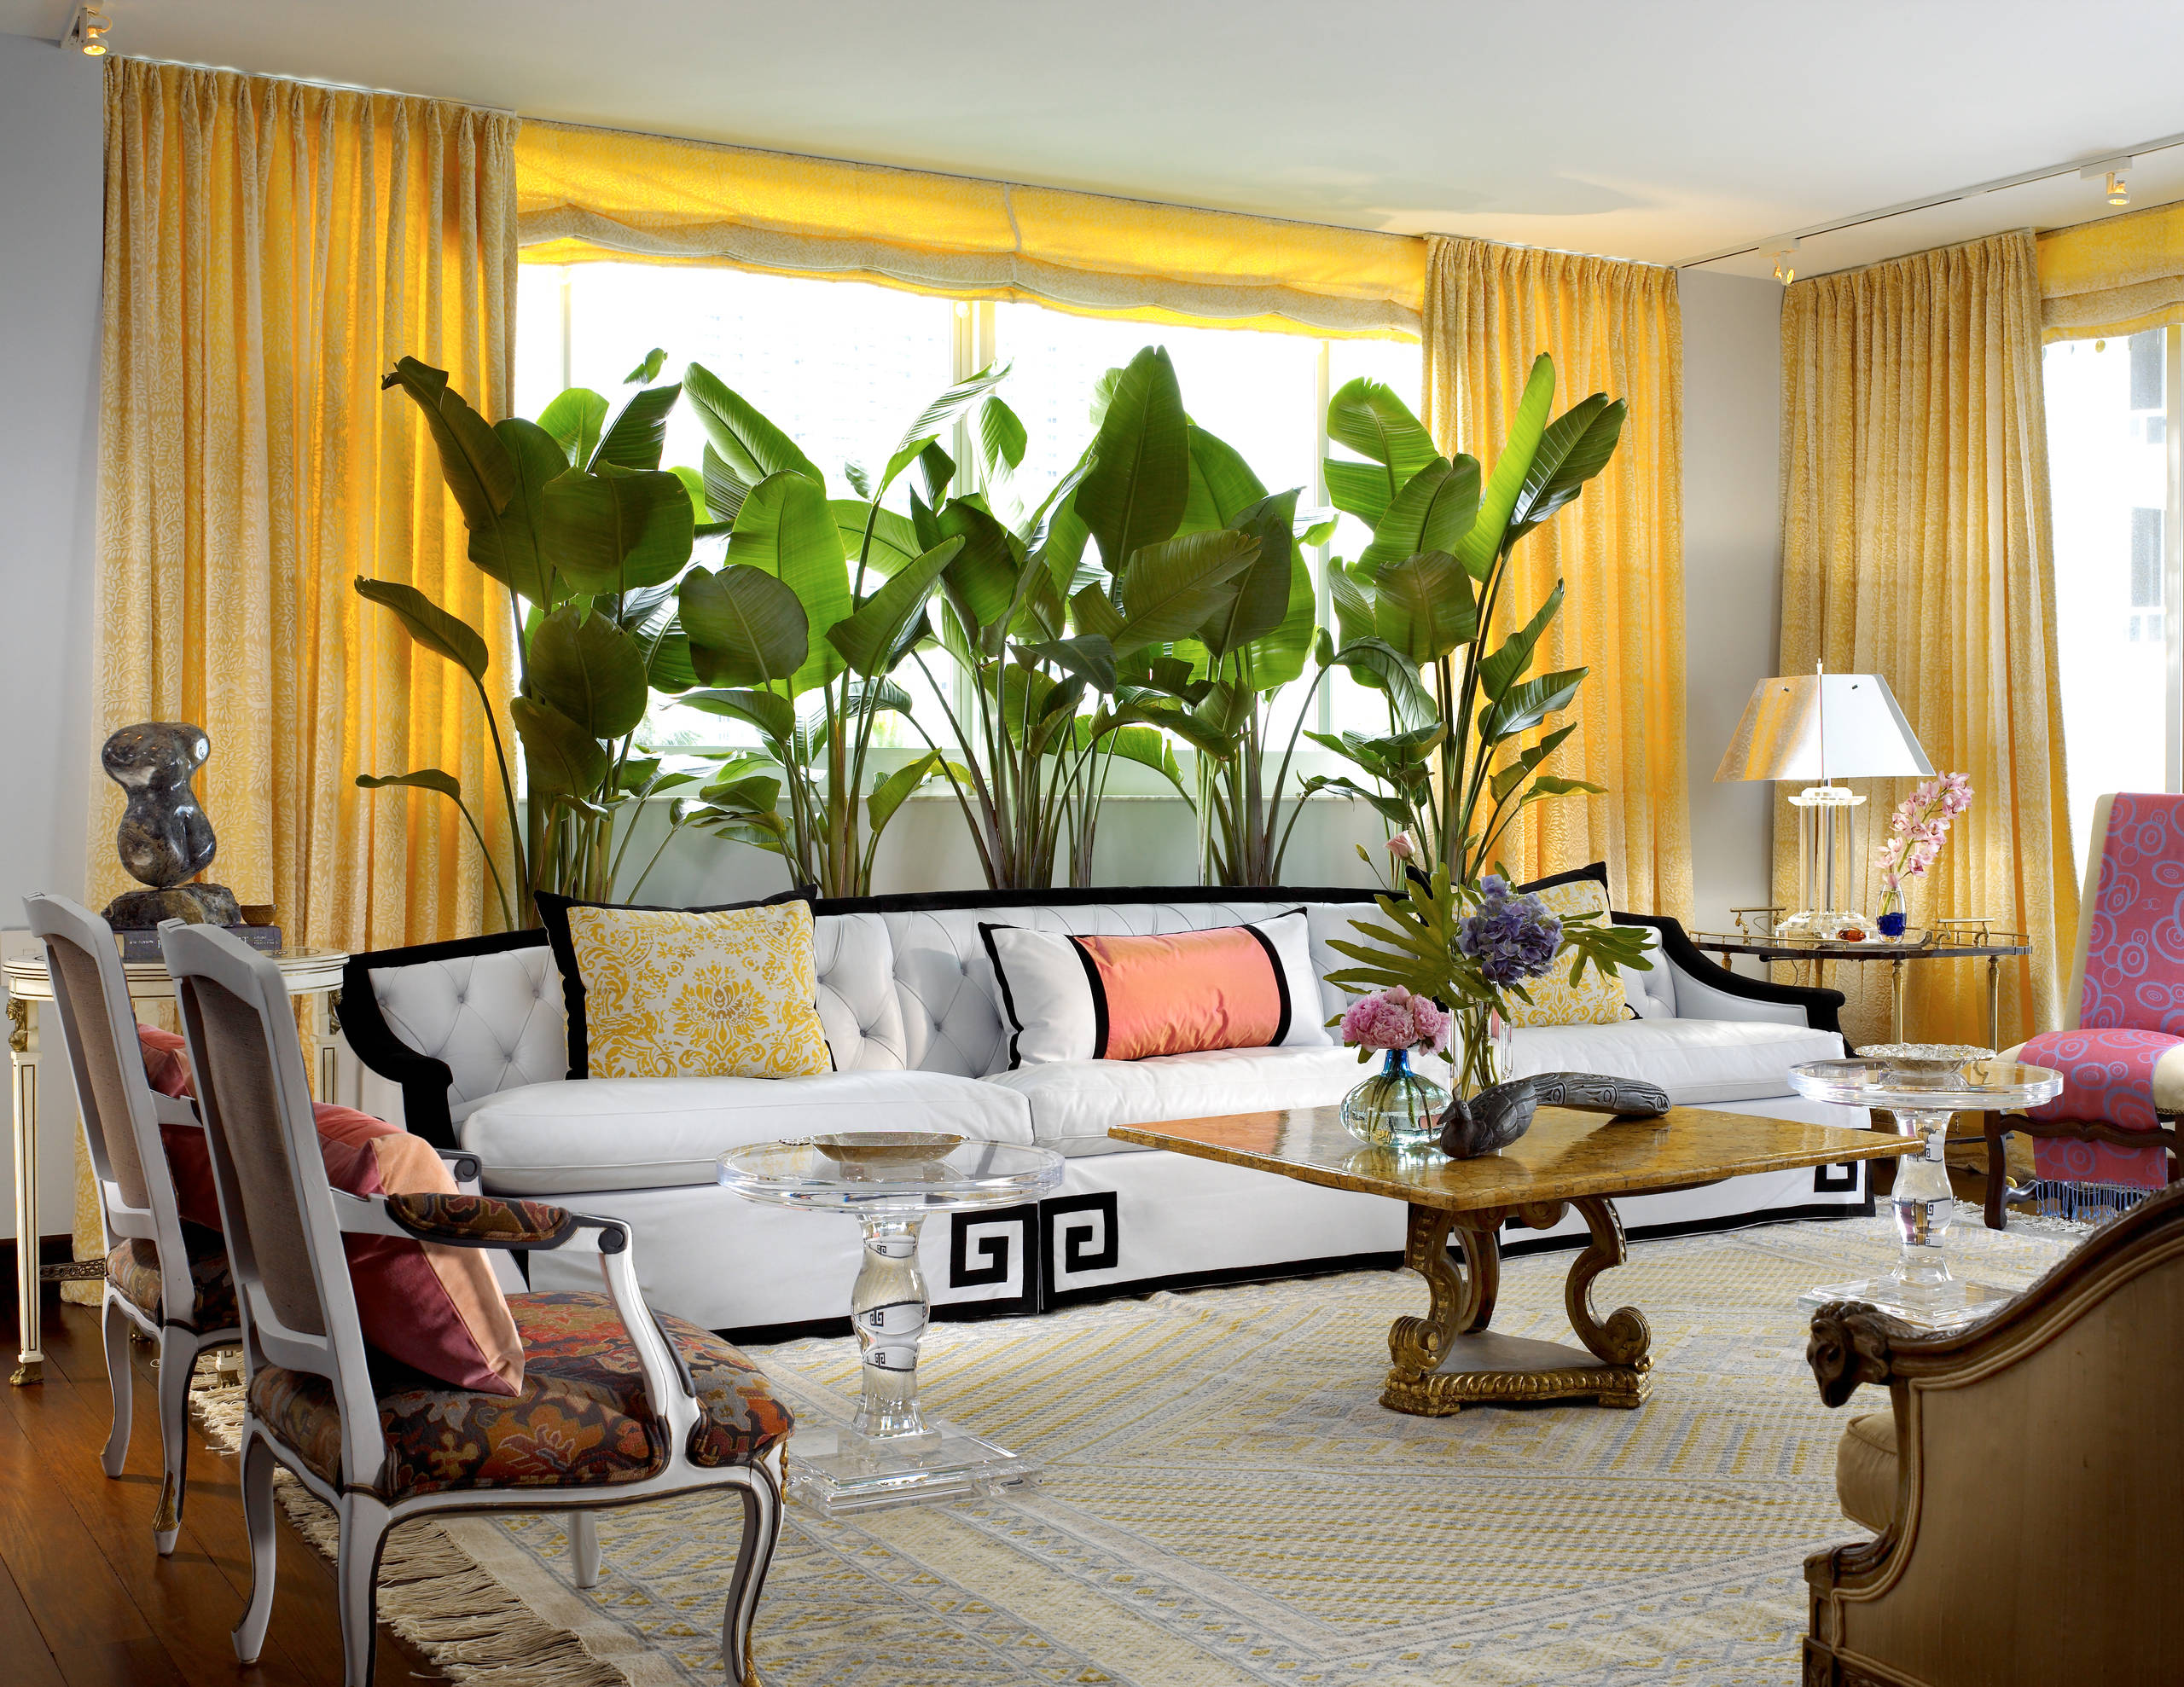 Miami condo - Eclectic - Living Room - Miami - by Sabrina Balsky Interior  Design | Houzz